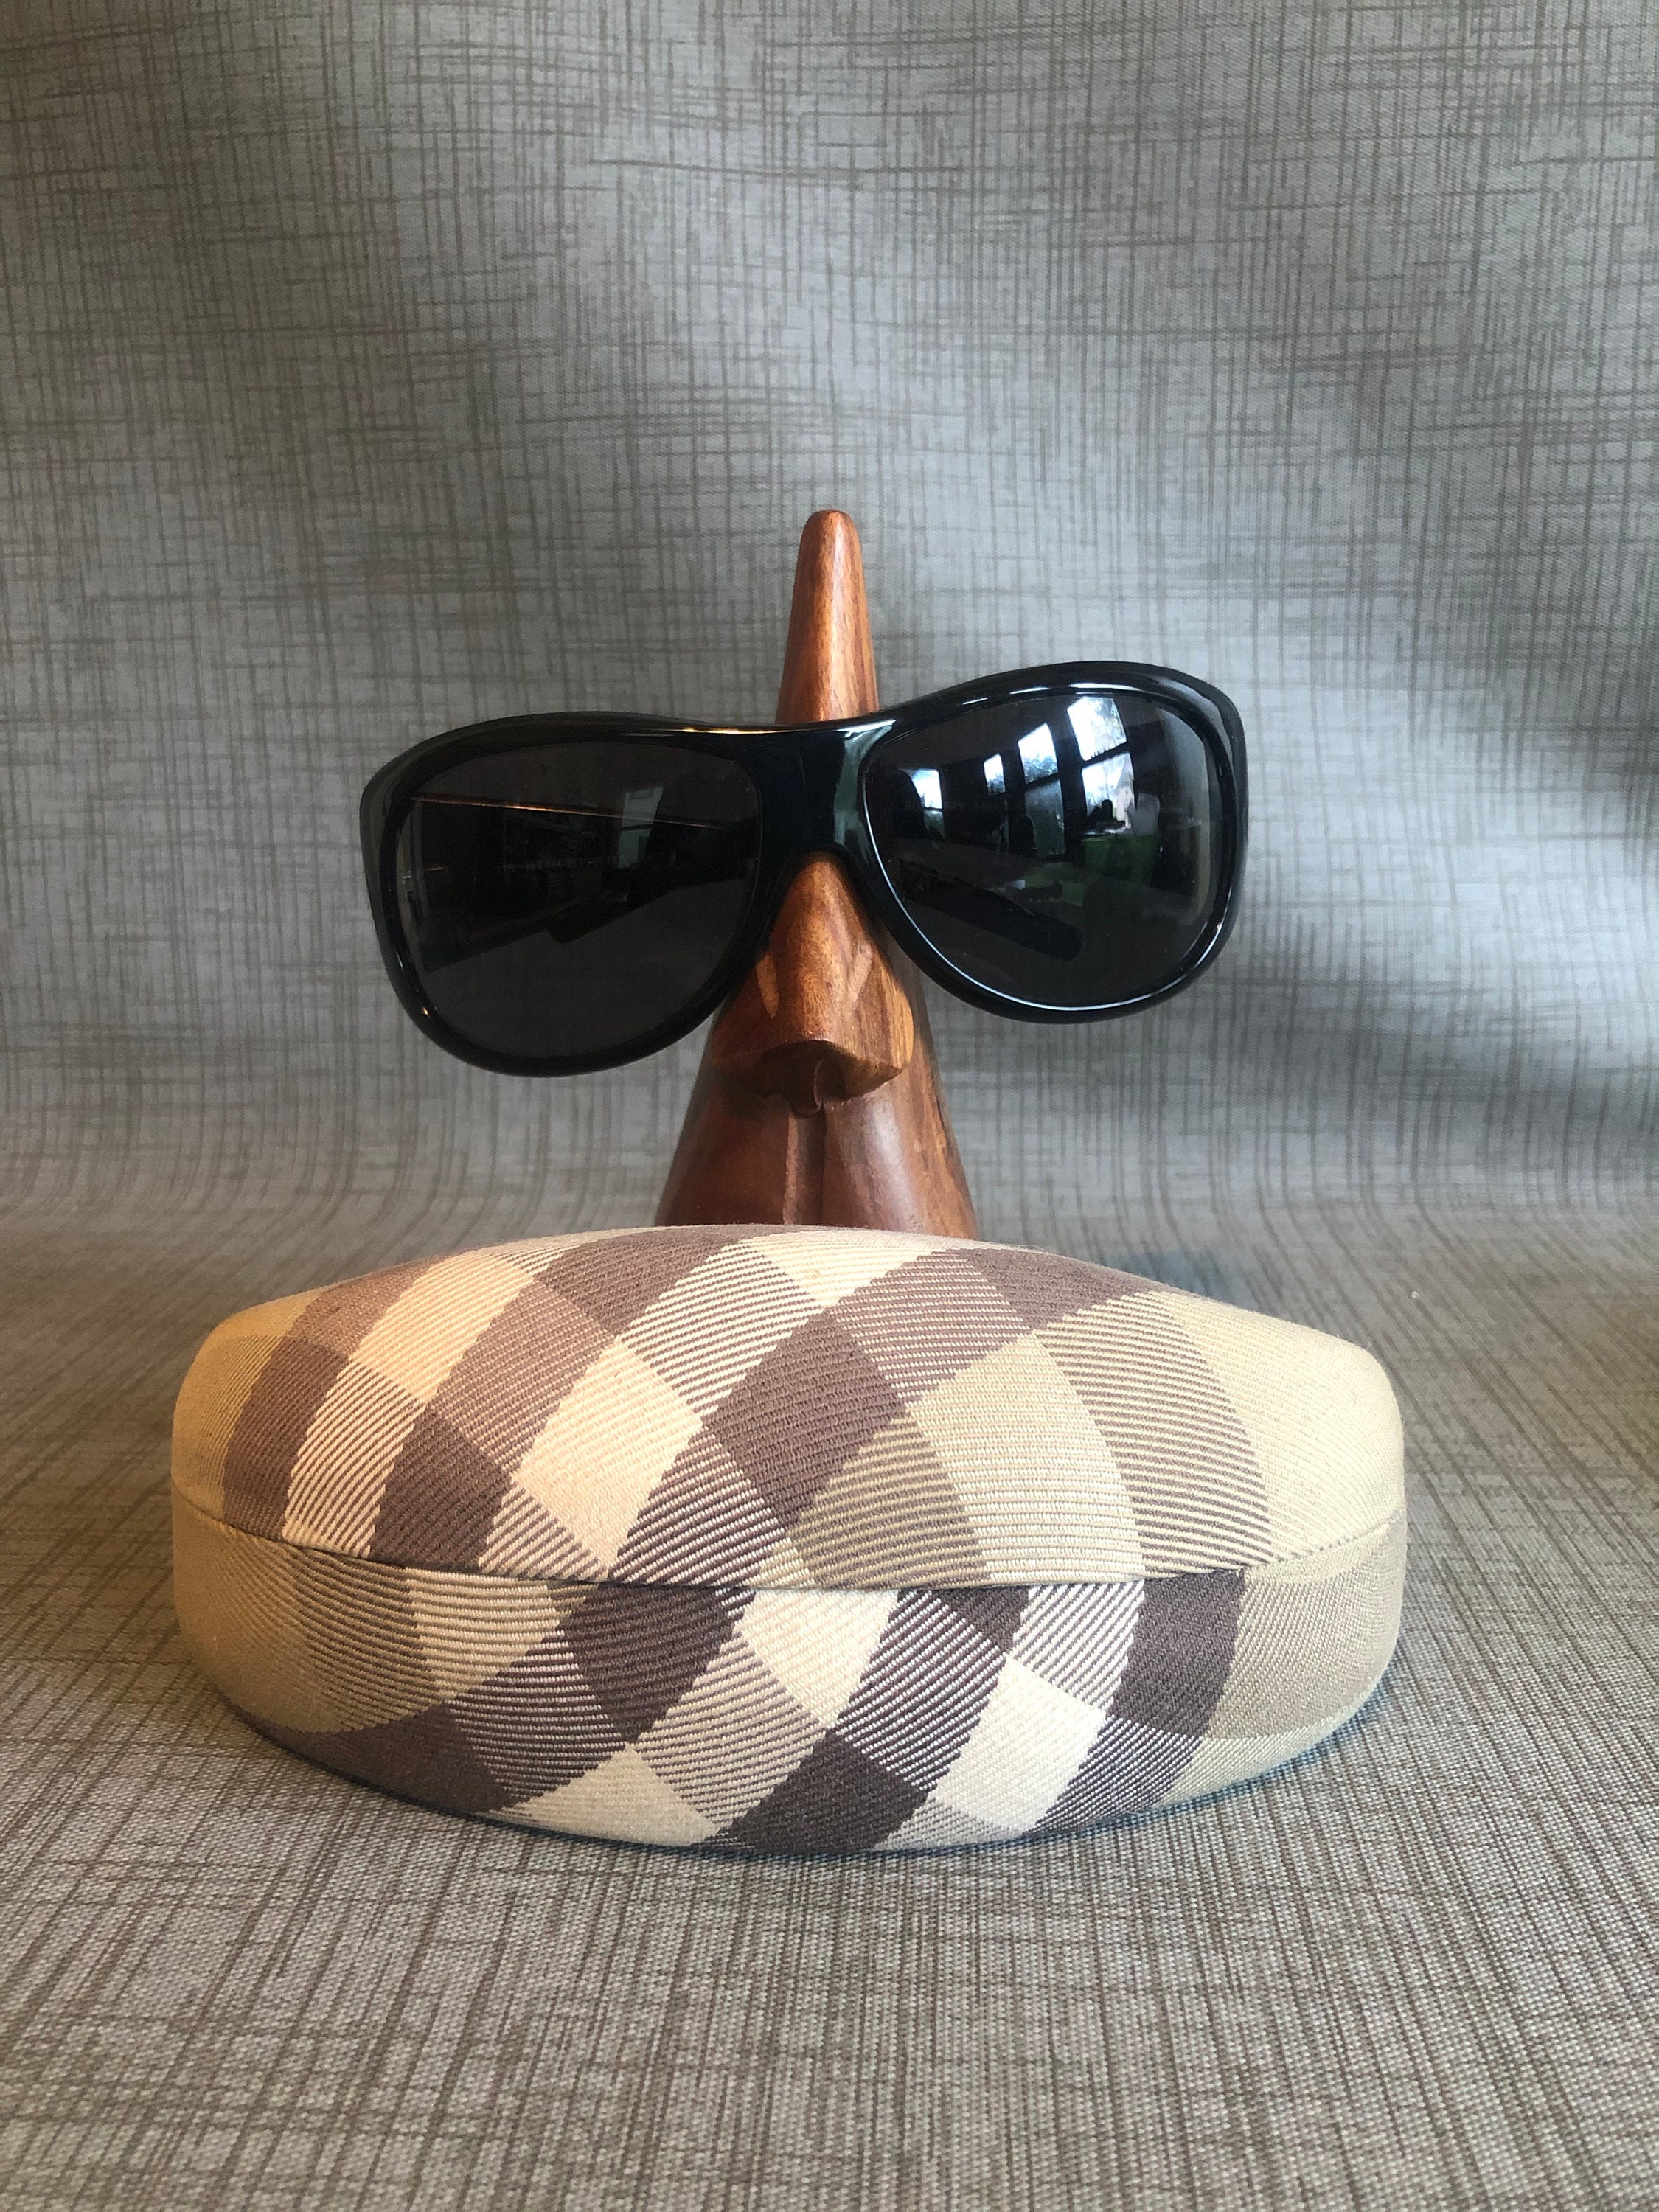 New design Burberry AAA+ Sunglasses #999933899 